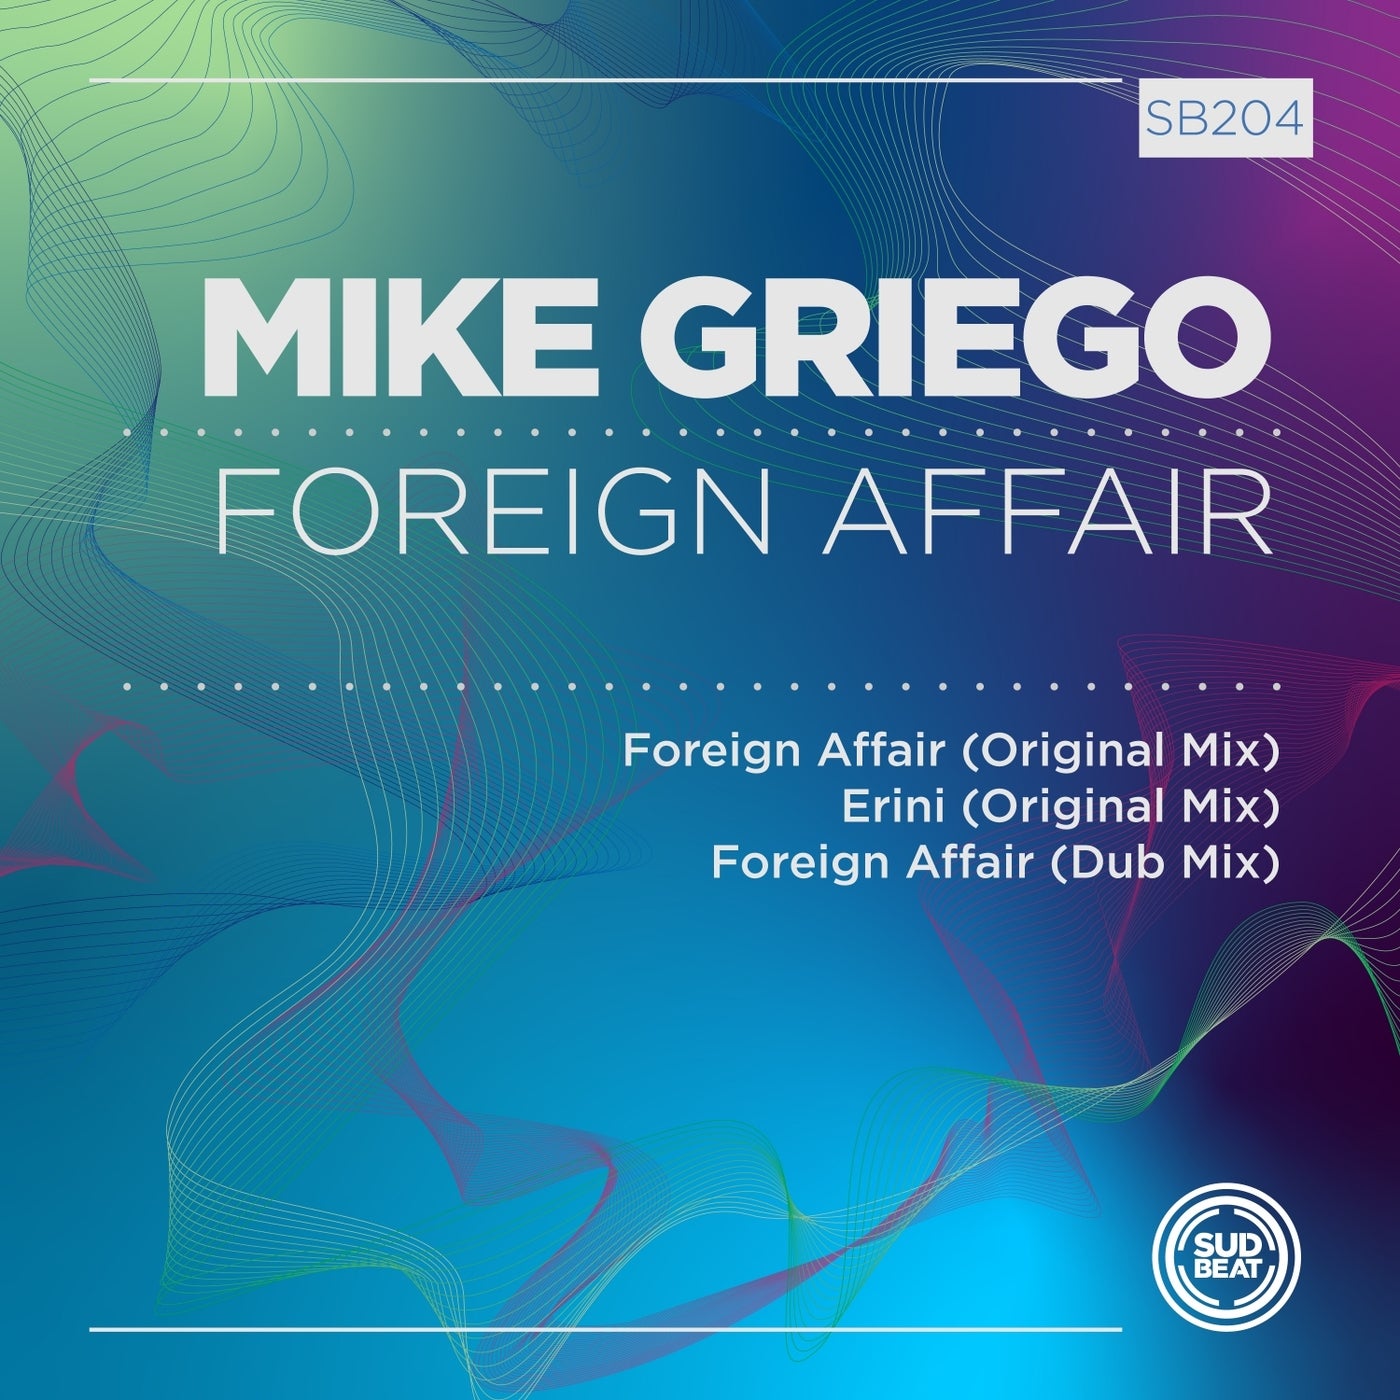 Mike Griego - Foreign Affair (Dub Mix)